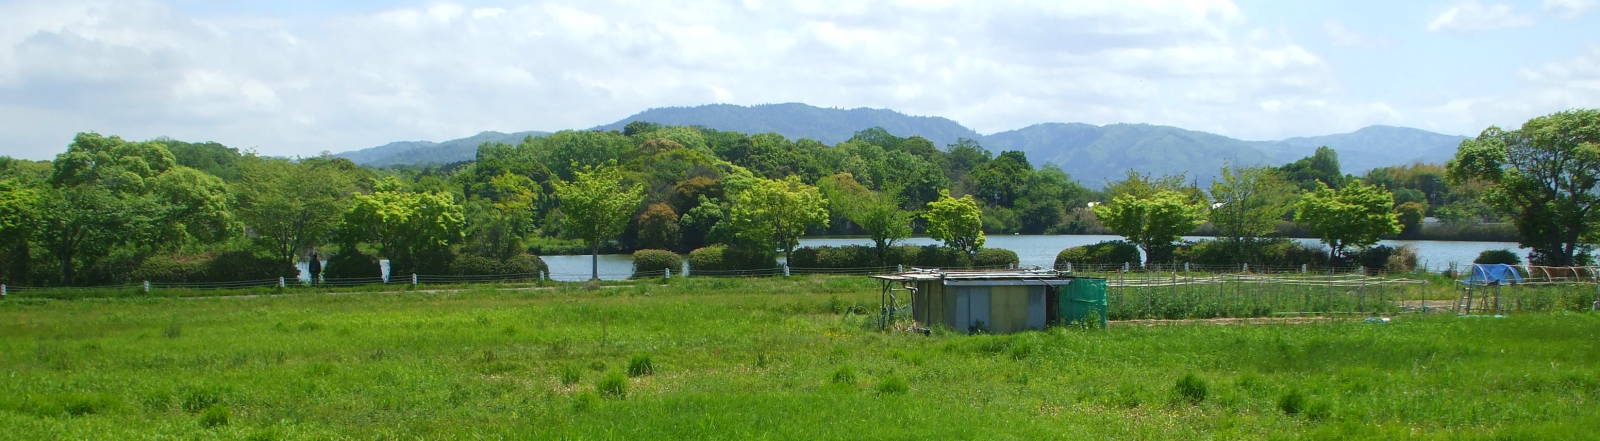 Farmland, ponds, and hills around Nara, Japan